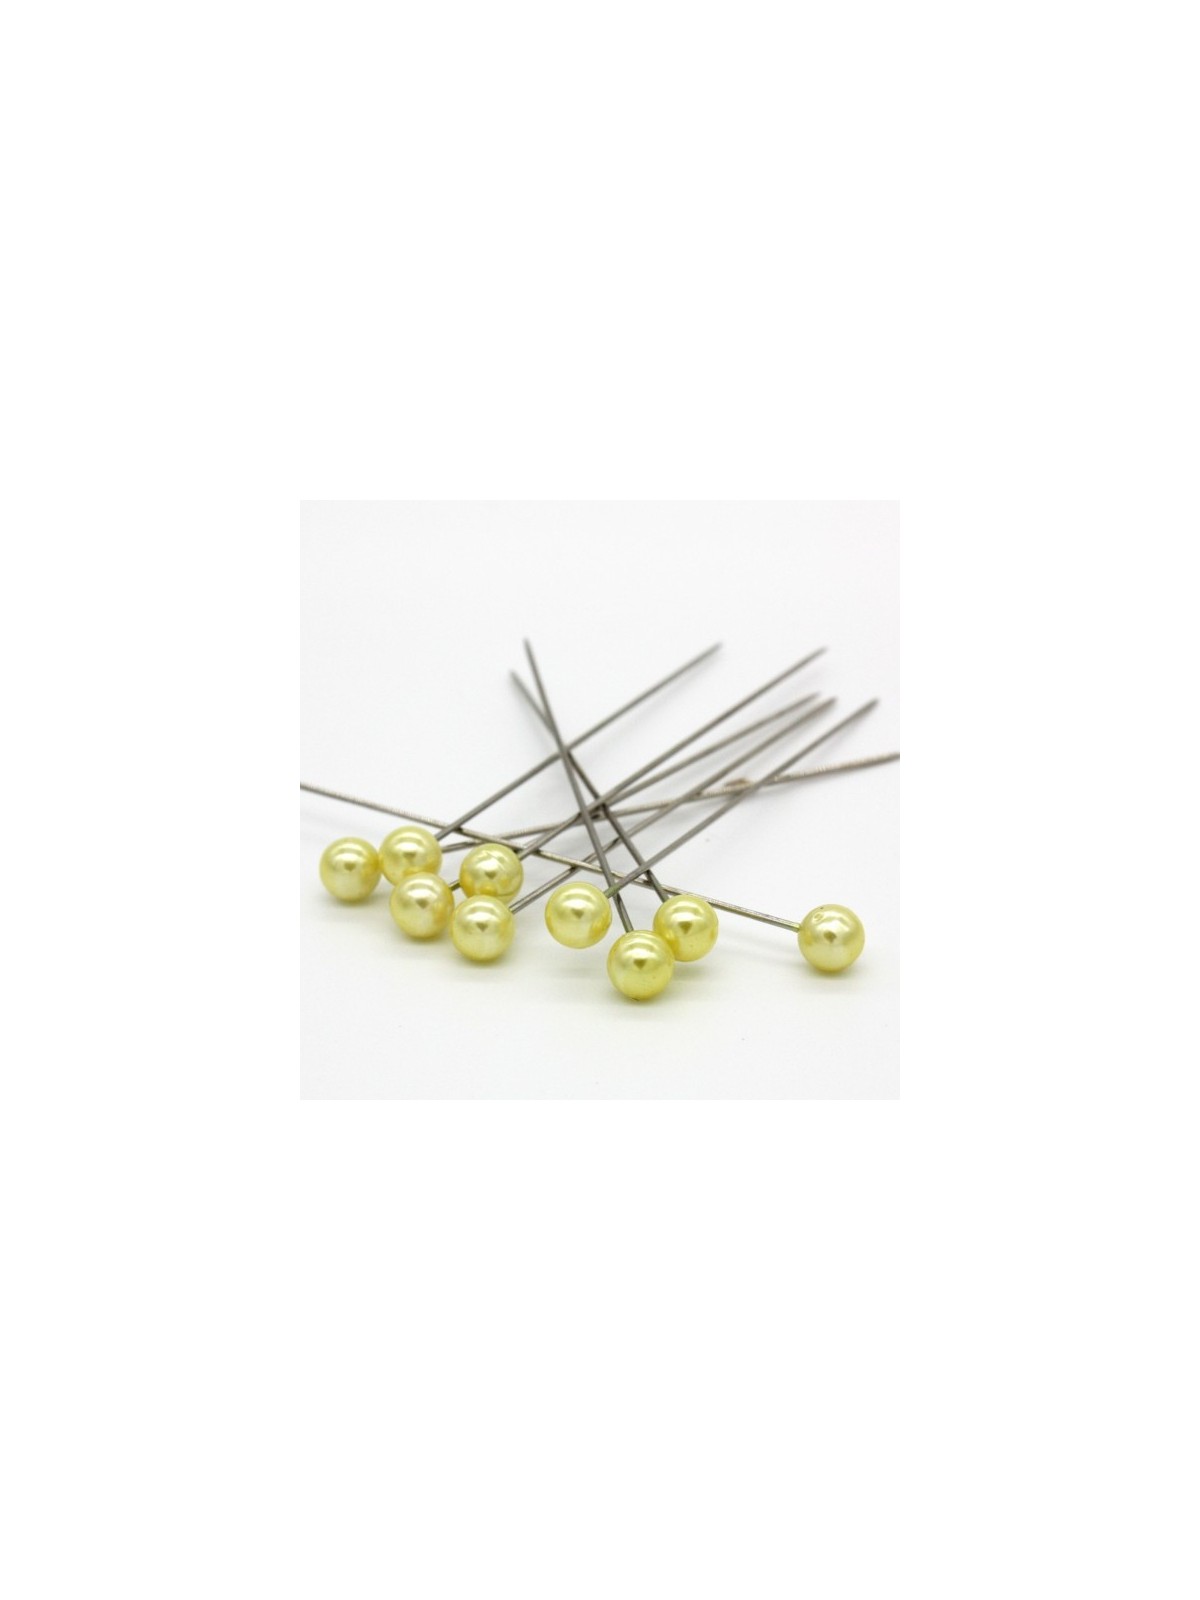 Dekorative pins - gelb Perle - 65mm/9stück